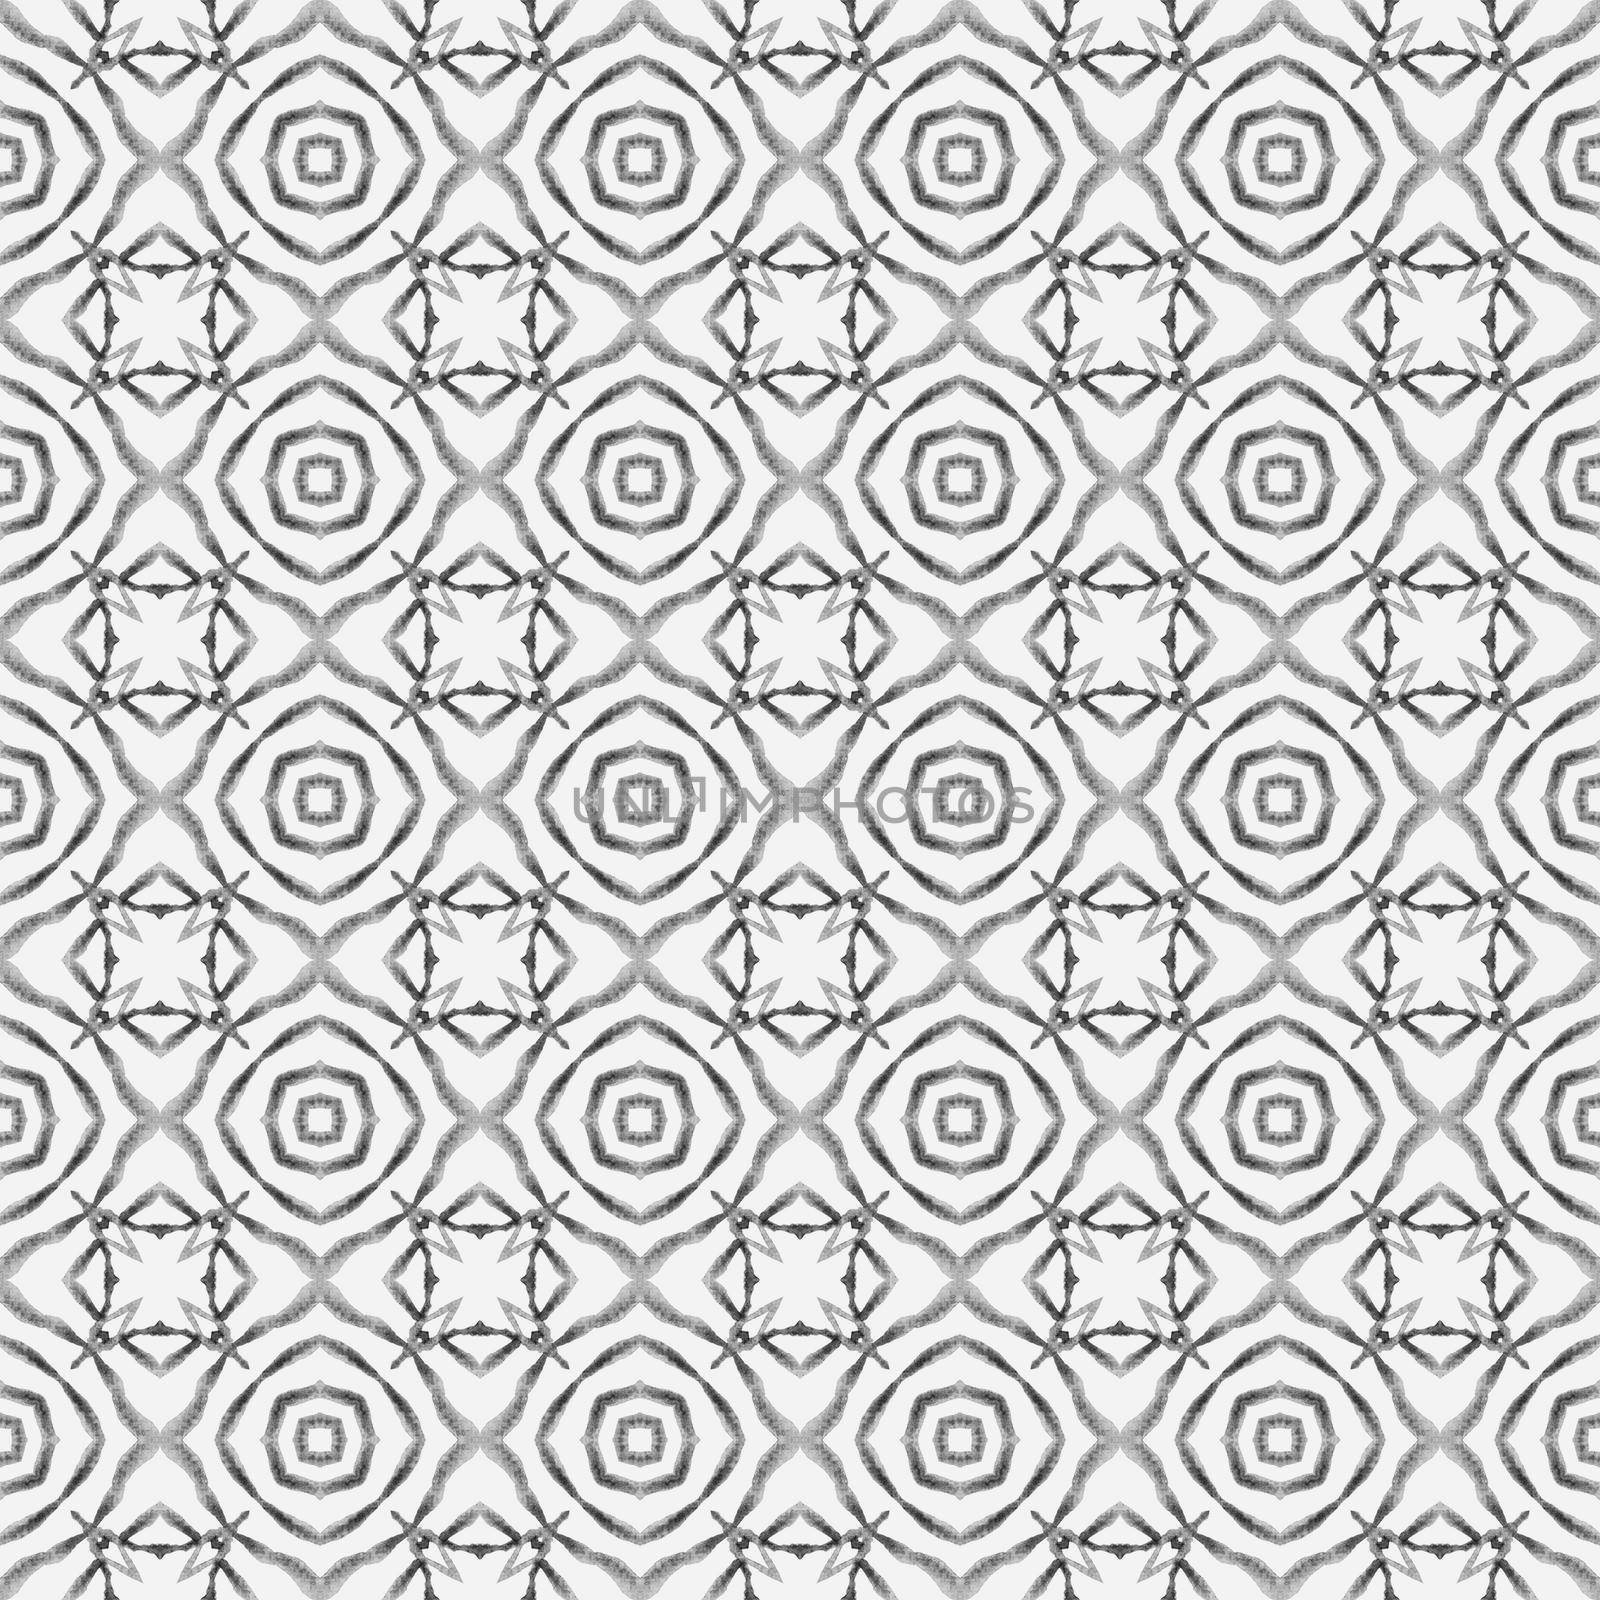 Mosaic seamless pattern. Black and white fancy boho chic summer design. Hand drawn green mosaic seamless border. Textile ready ravishing print, swimwear fabric, wallpaper, wrapping.